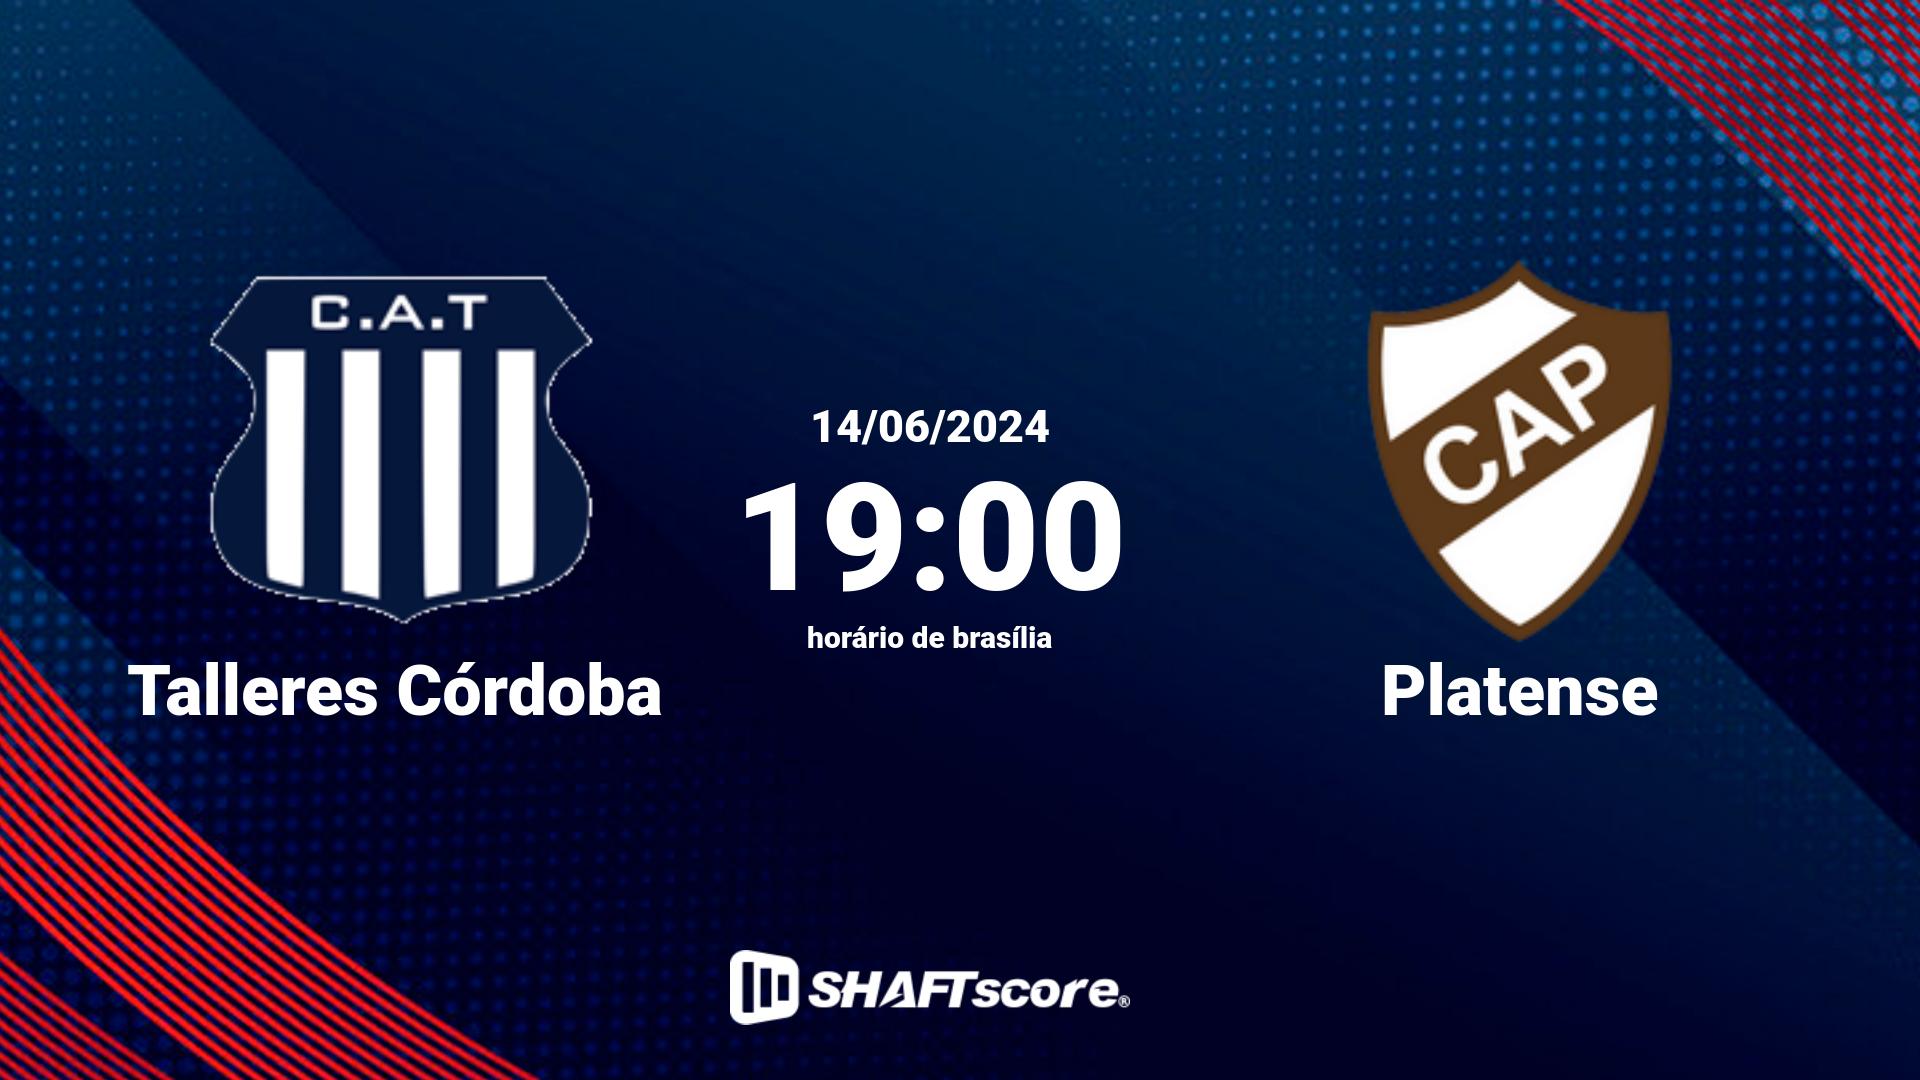 Estatísticas do jogo Talleres Córdoba vs Platense 14.06 19:00